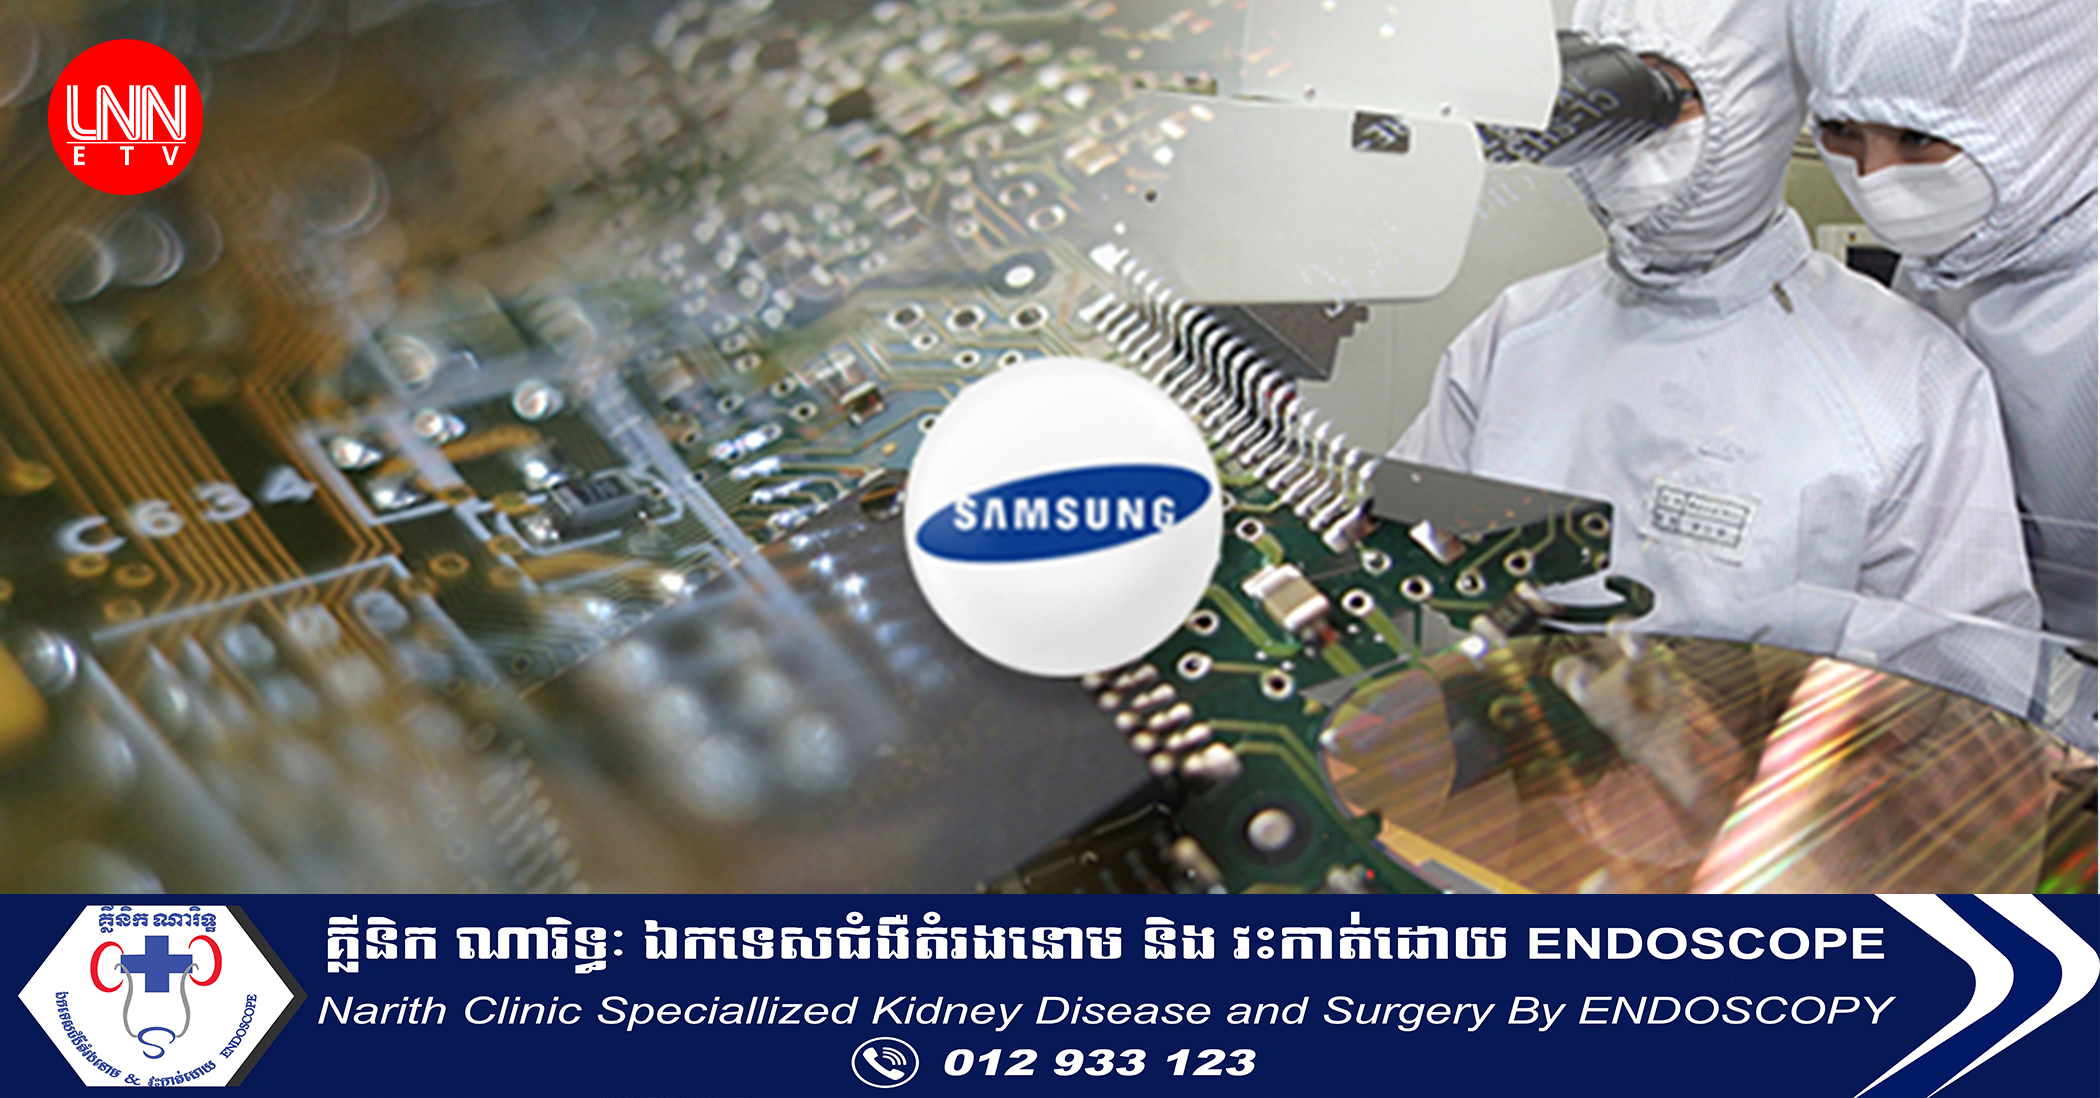 Samsung គ្រោងផលិតបន្ទះឈីបចល័ត 2-nm នៅឆ្នាំ ២០២៥ខាងមុខនេះ